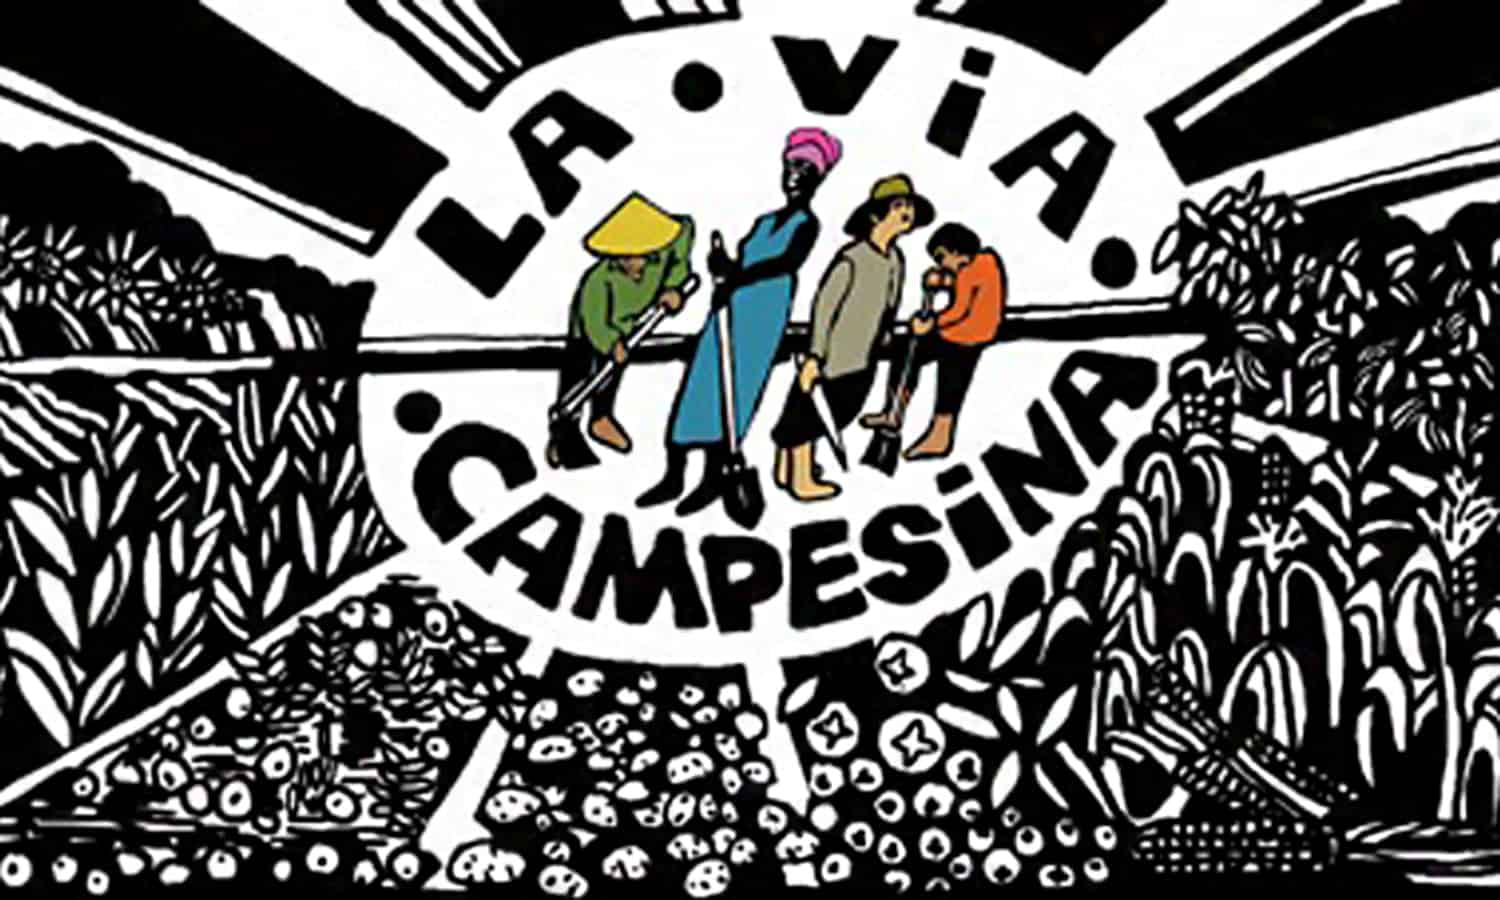 La Via Campesina荣誉农村农民的劳动和斗争4月17日